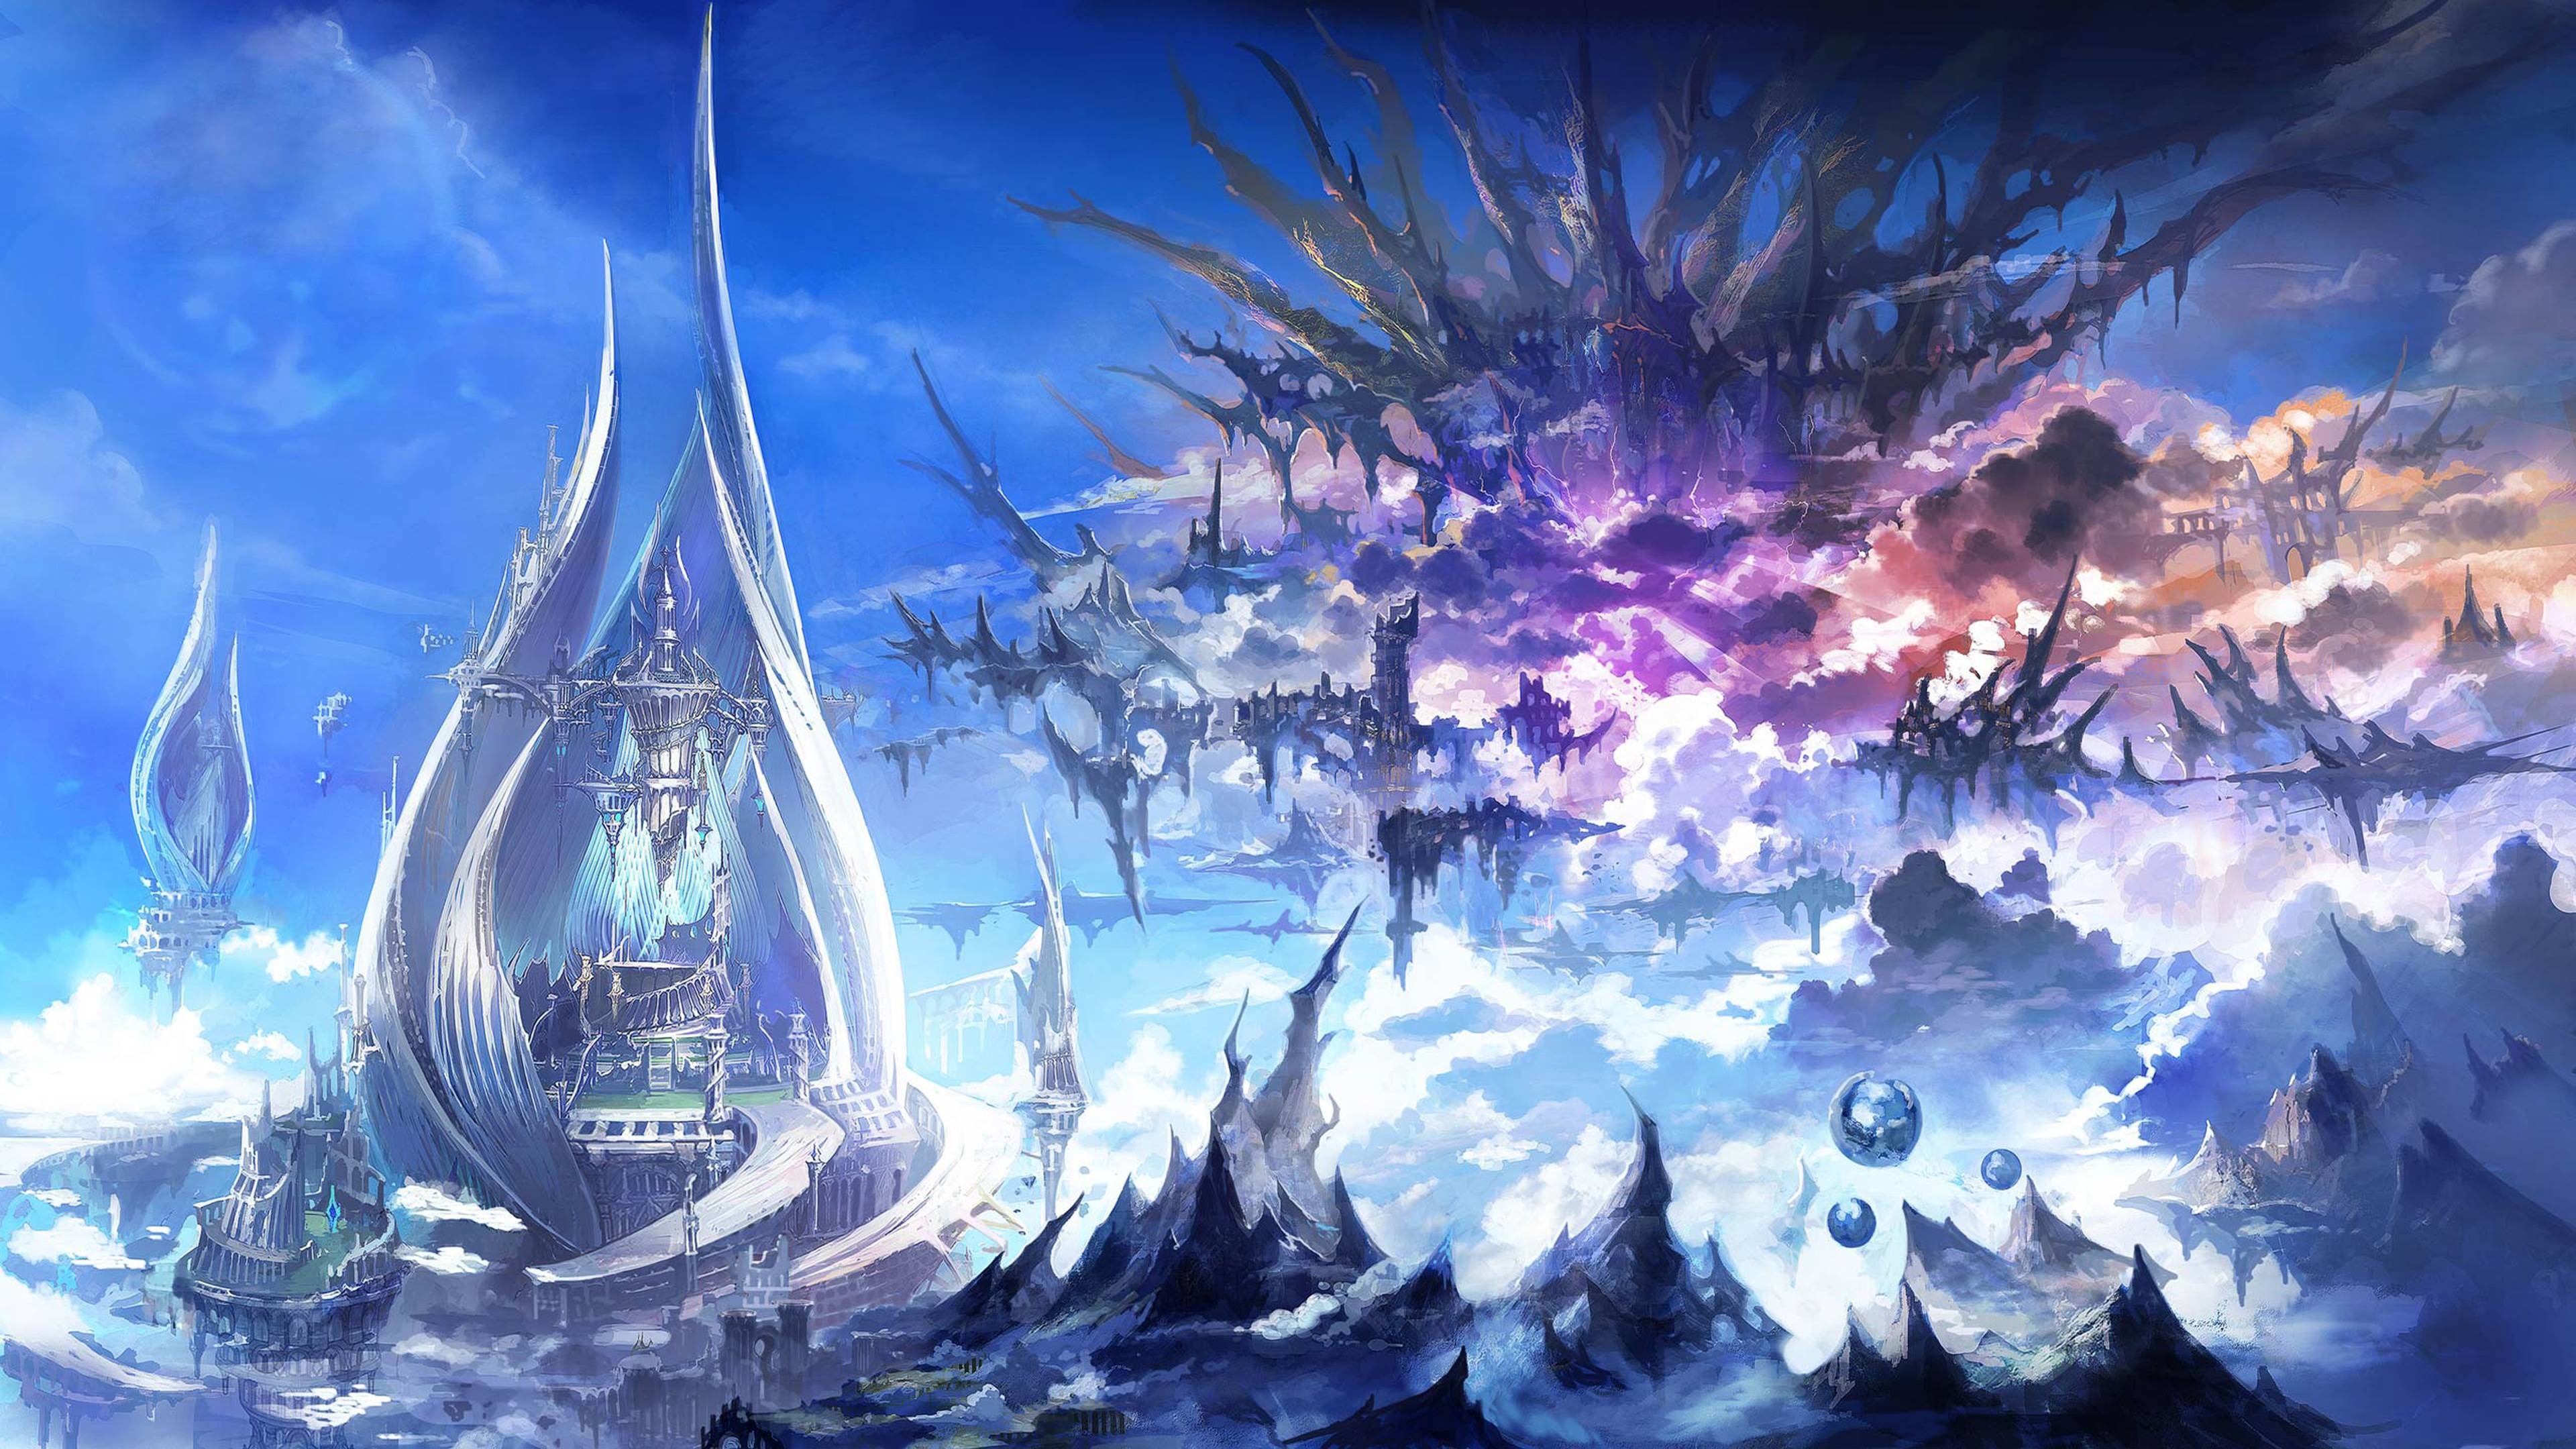 final fantasy 14 wallpaper,cg artwork,sky,world,strategy video game,ghost ship